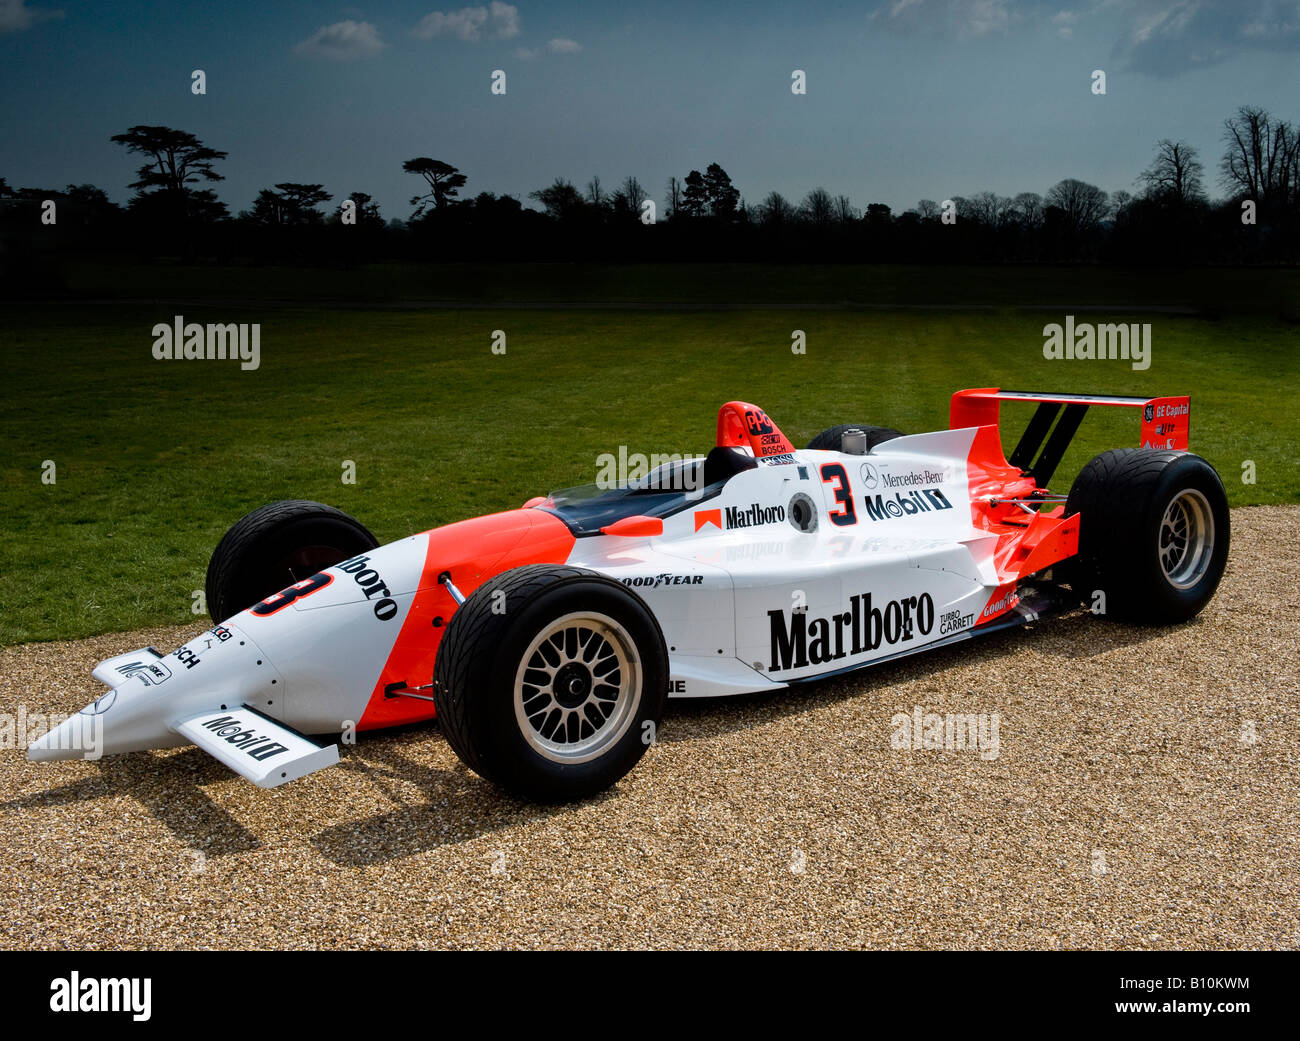 Mercedes Penske Indy Car racing auto Stock Photo